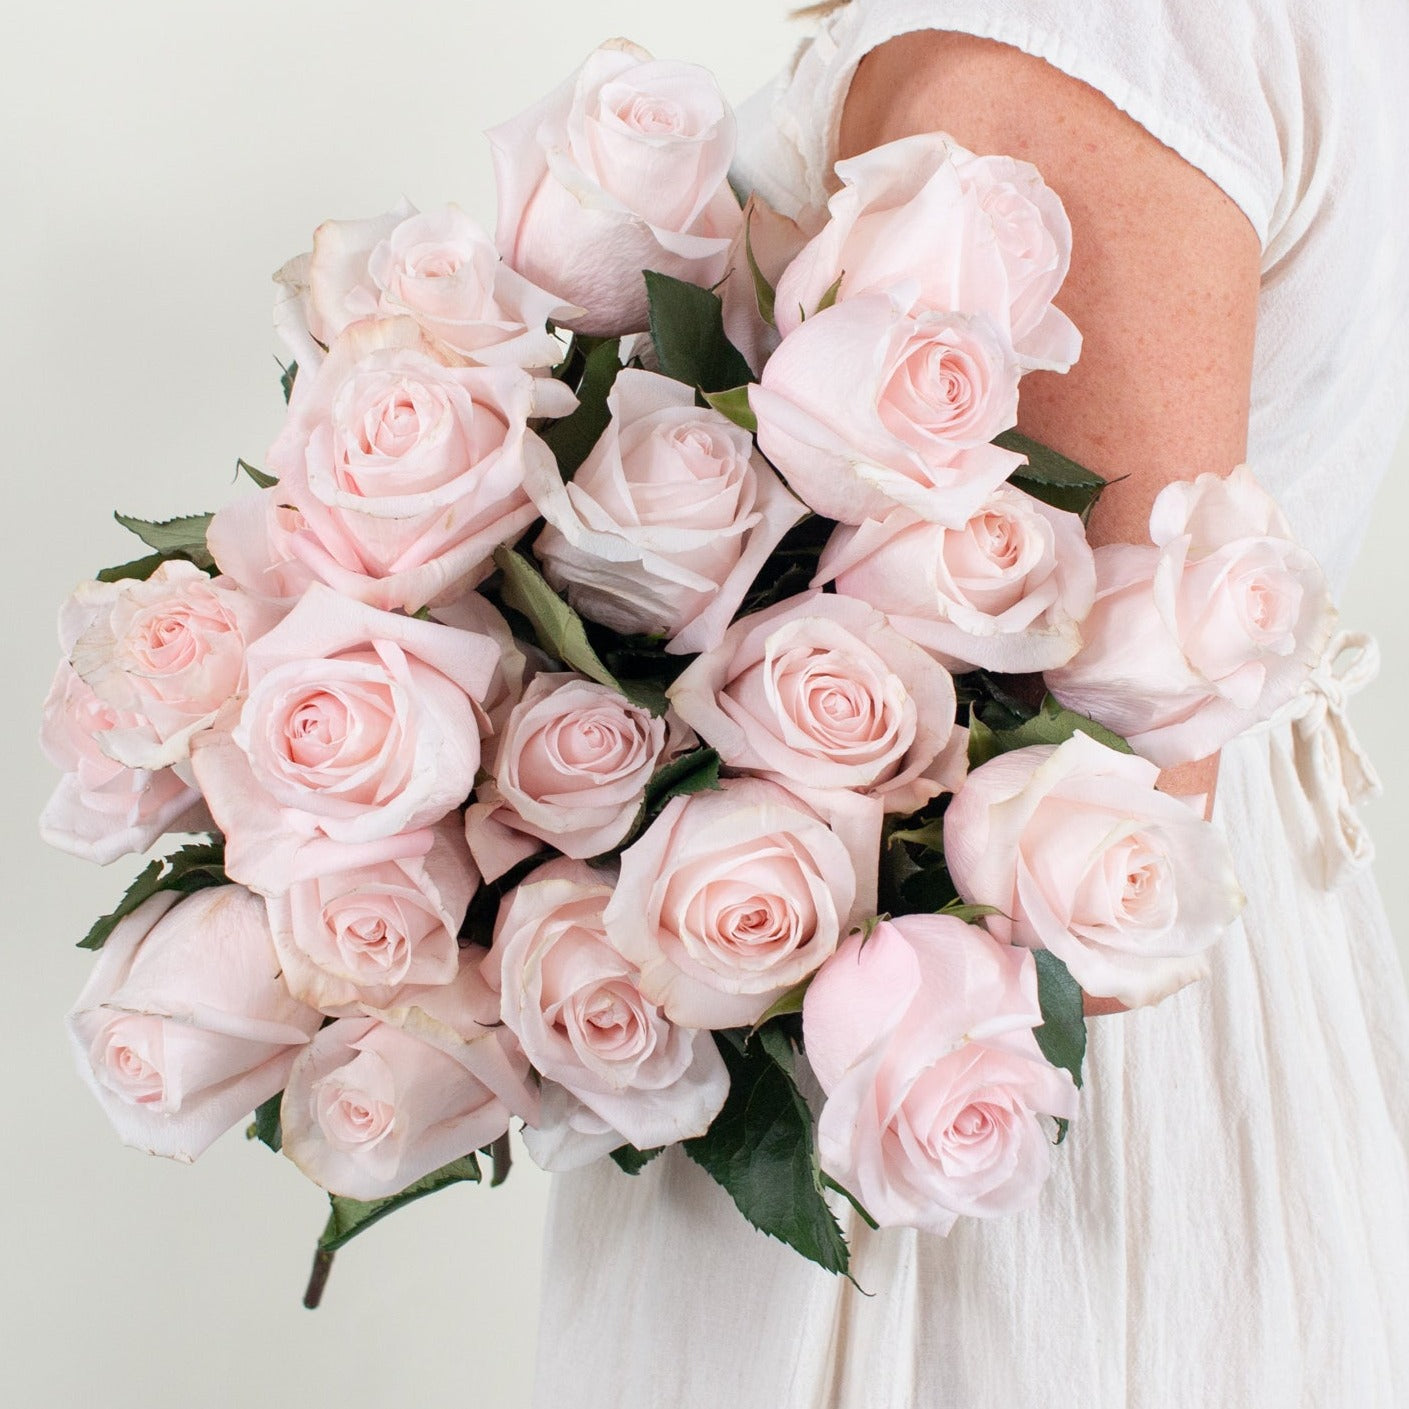 blush/light pink roses